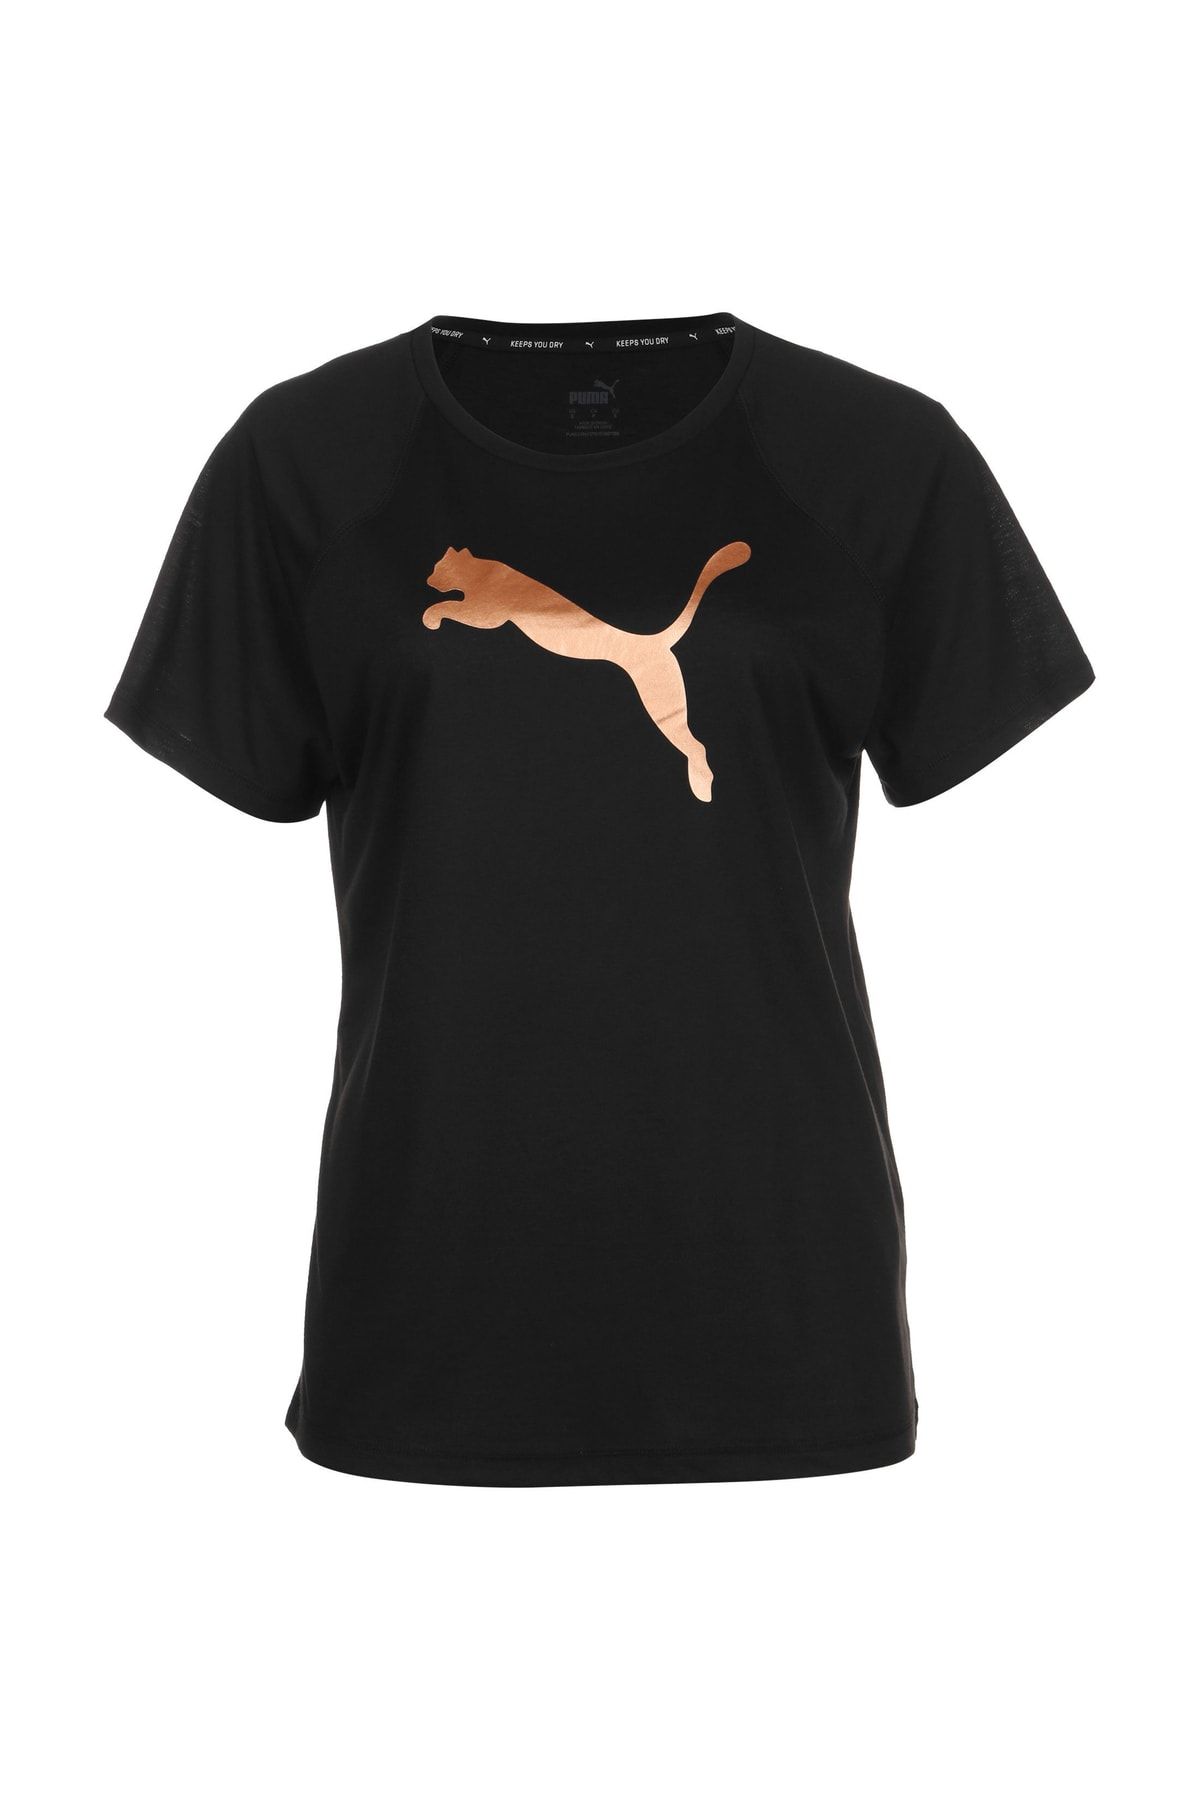 Puma fit - - Regular T-Shirt Trendyol - Black